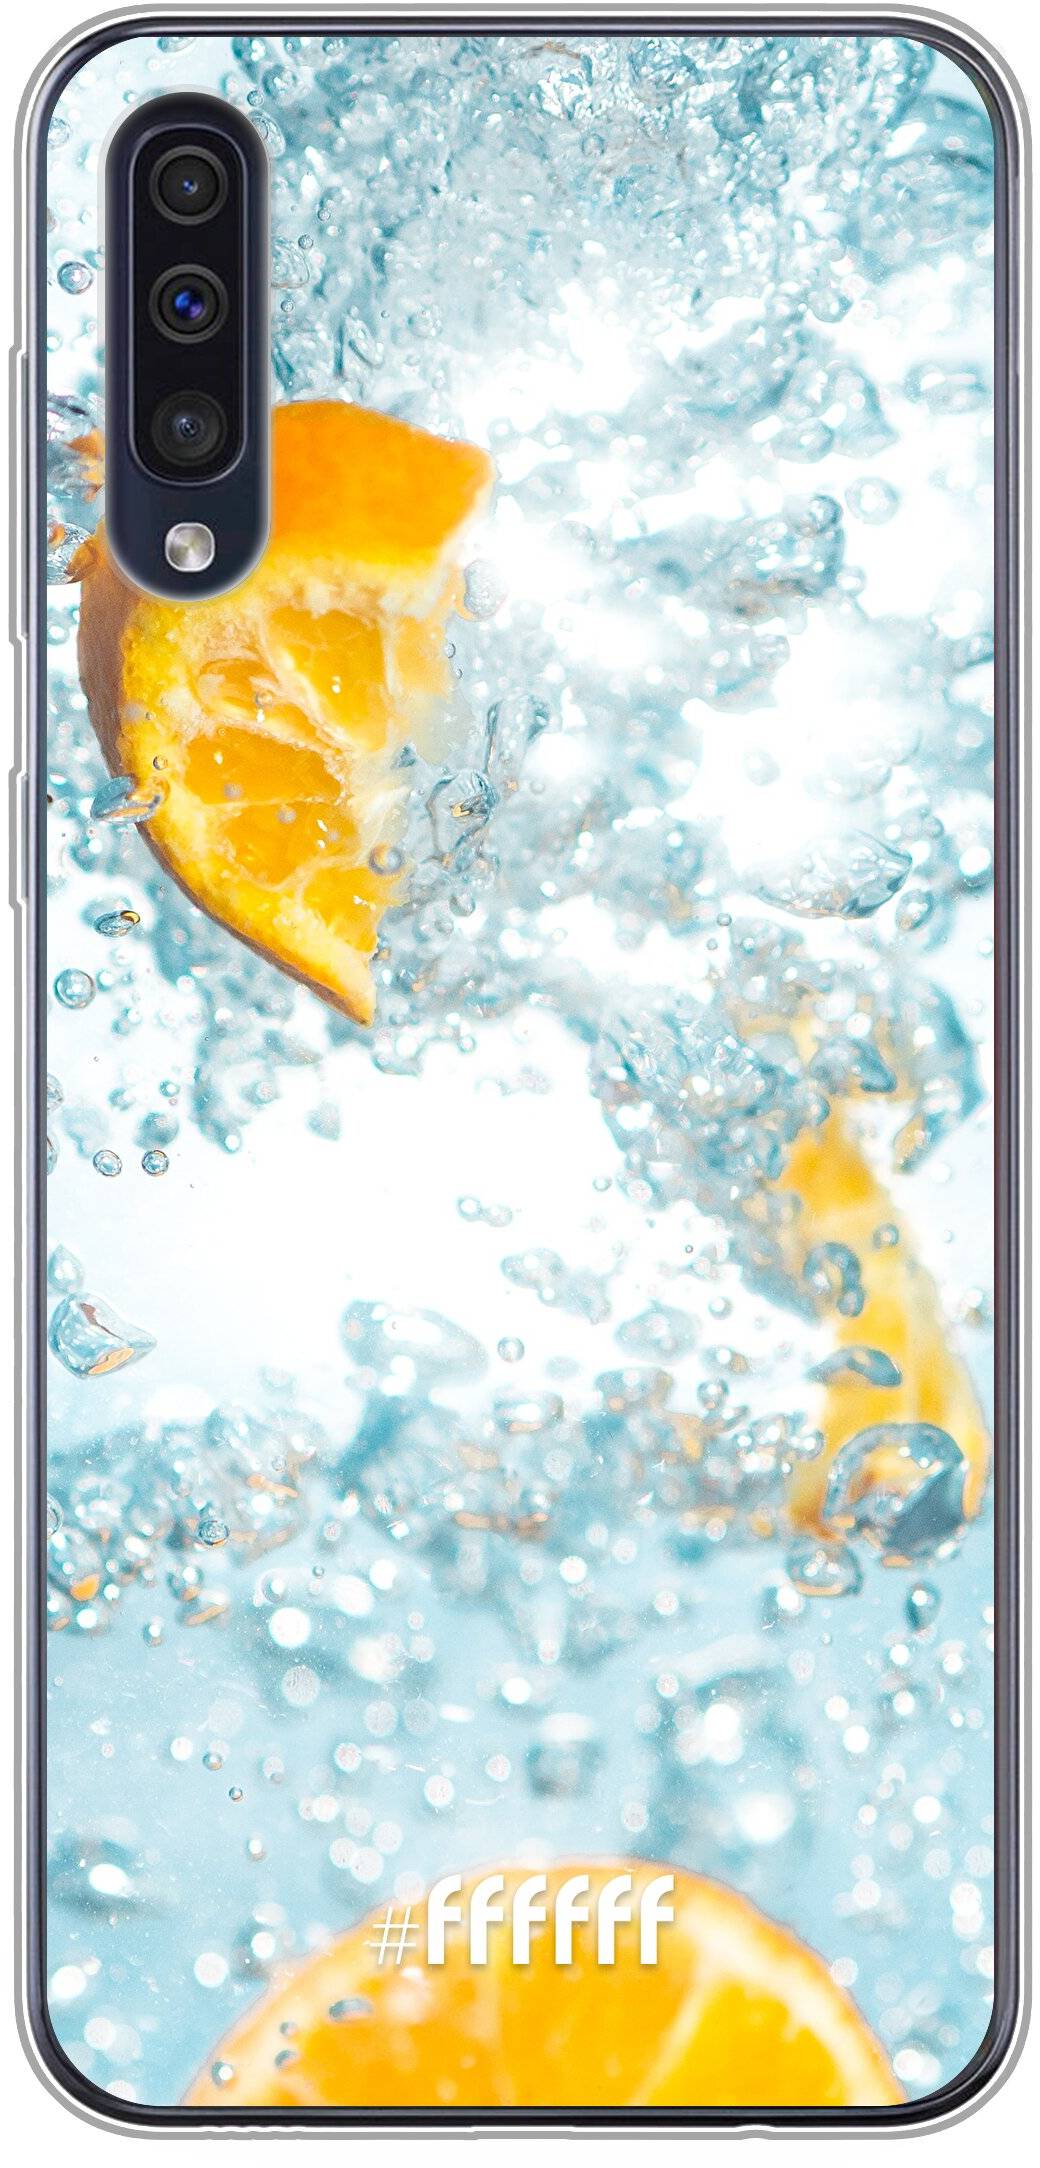 Lemon Fresh Galaxy A50s